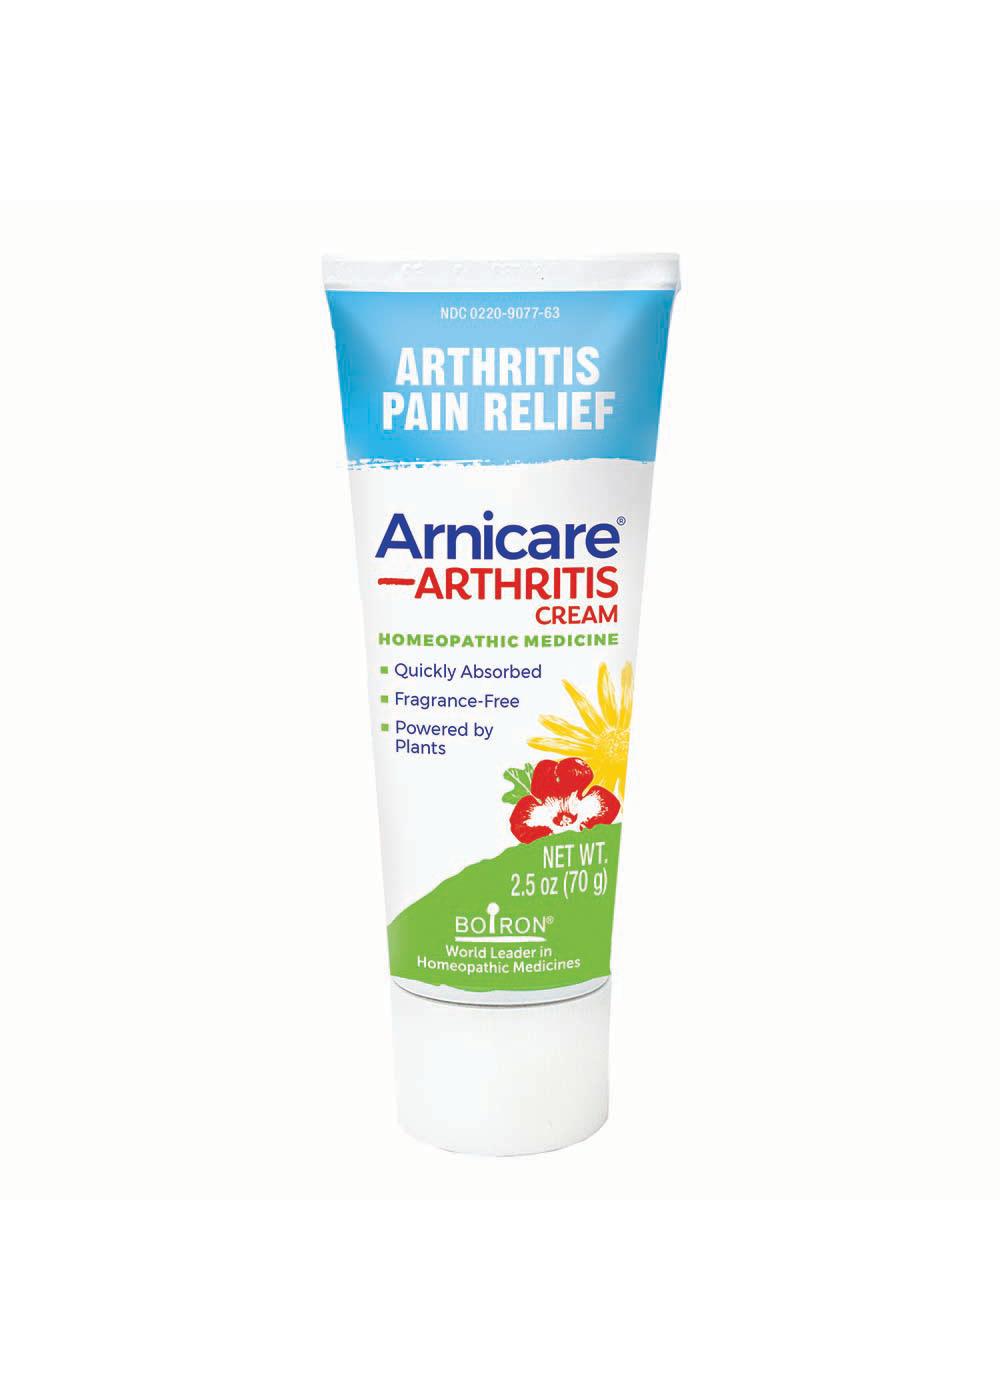 Arnicare Arthritis Cream; image 2 of 2